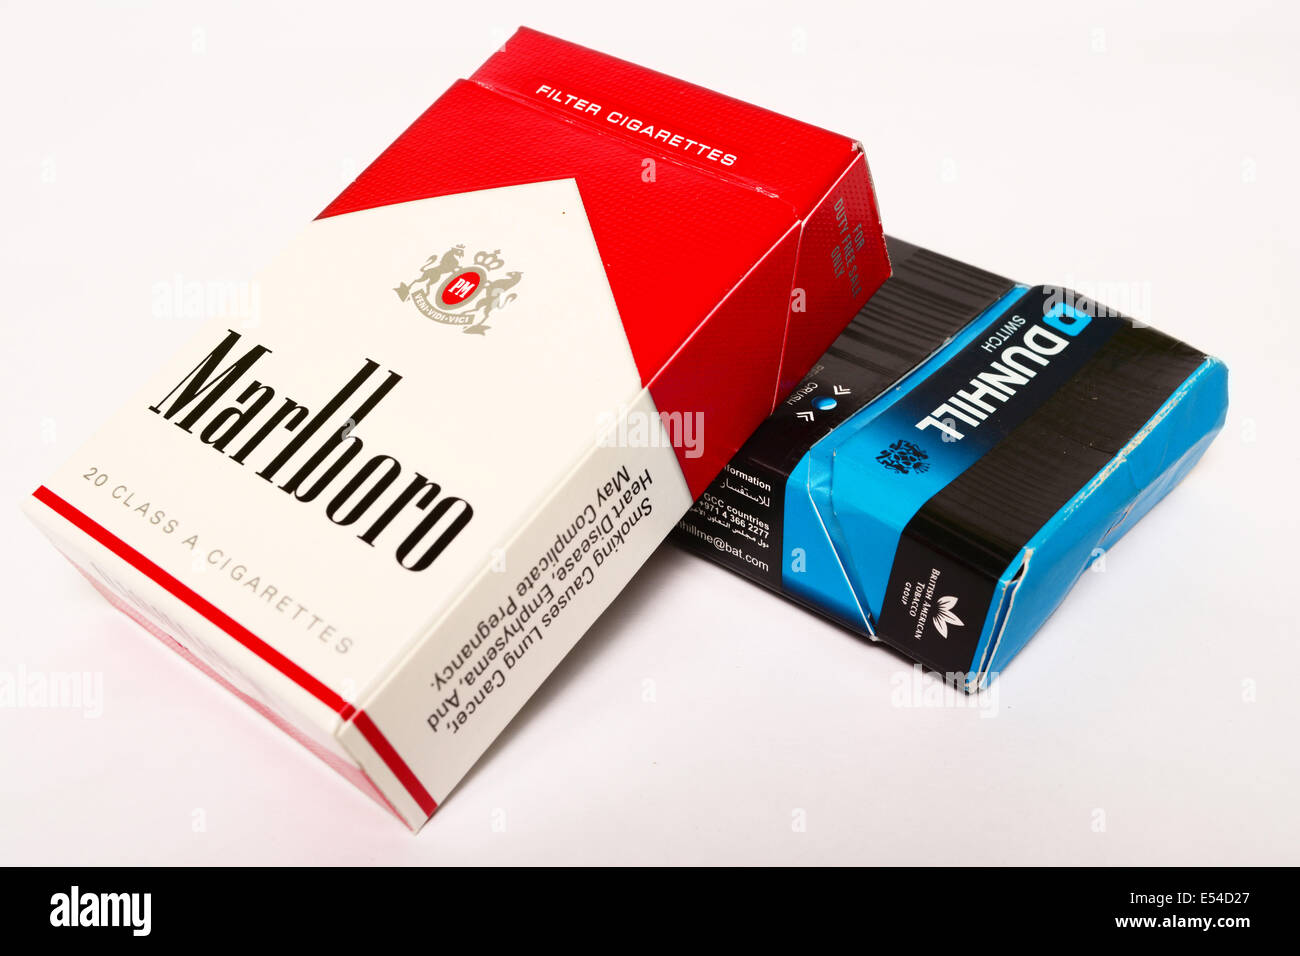 Paquets de cigarettes Dunhill Marlboro et Banque D'Images